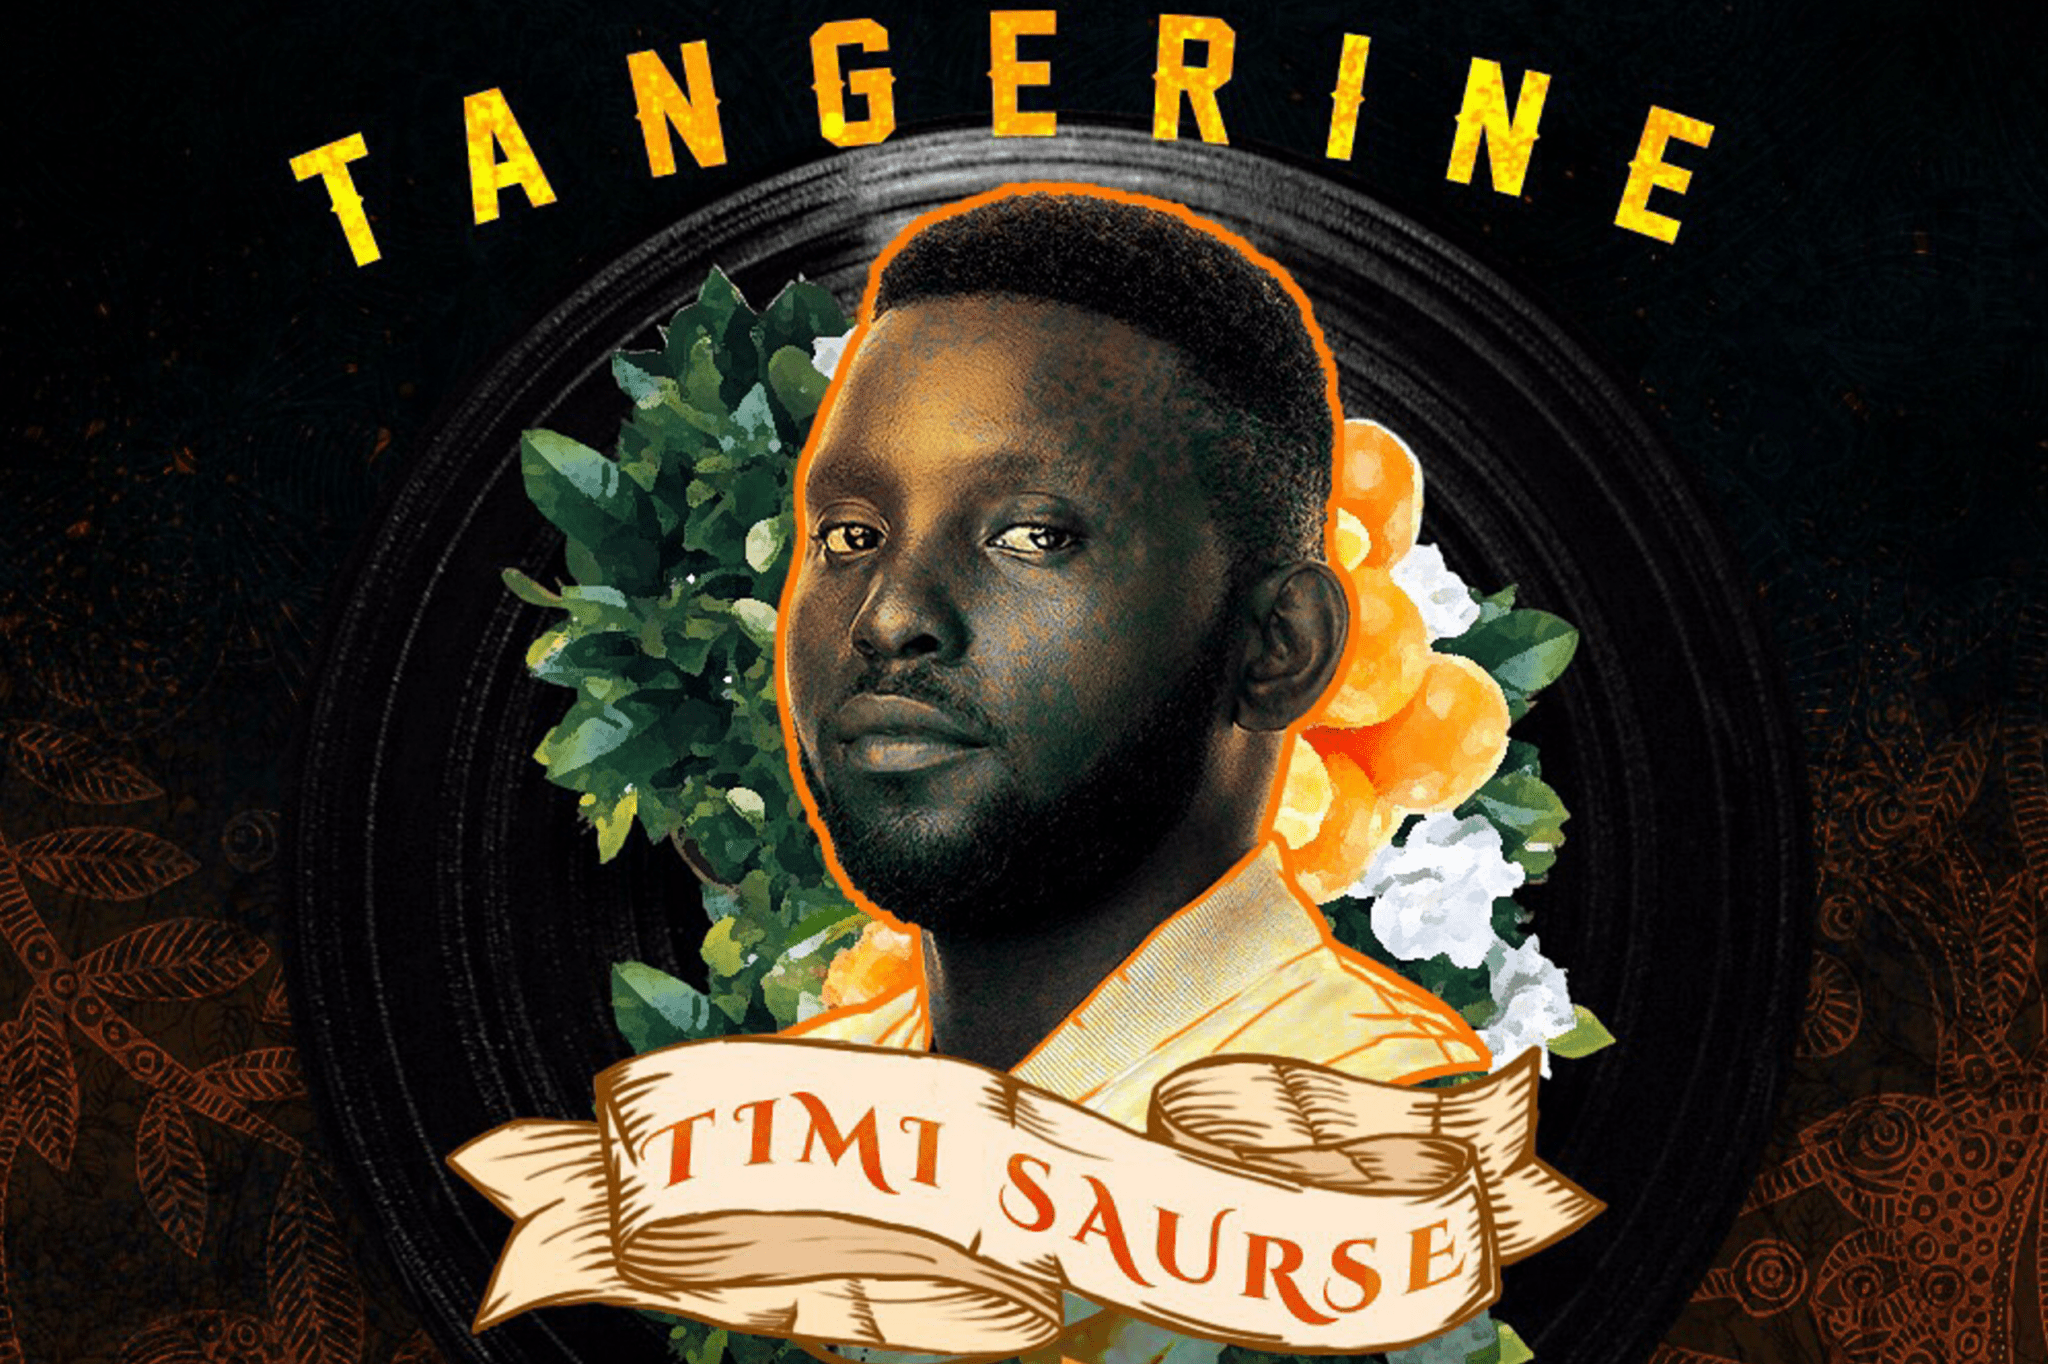 Timi Saurse’s debut, “Tangerine” is Strangely familiar